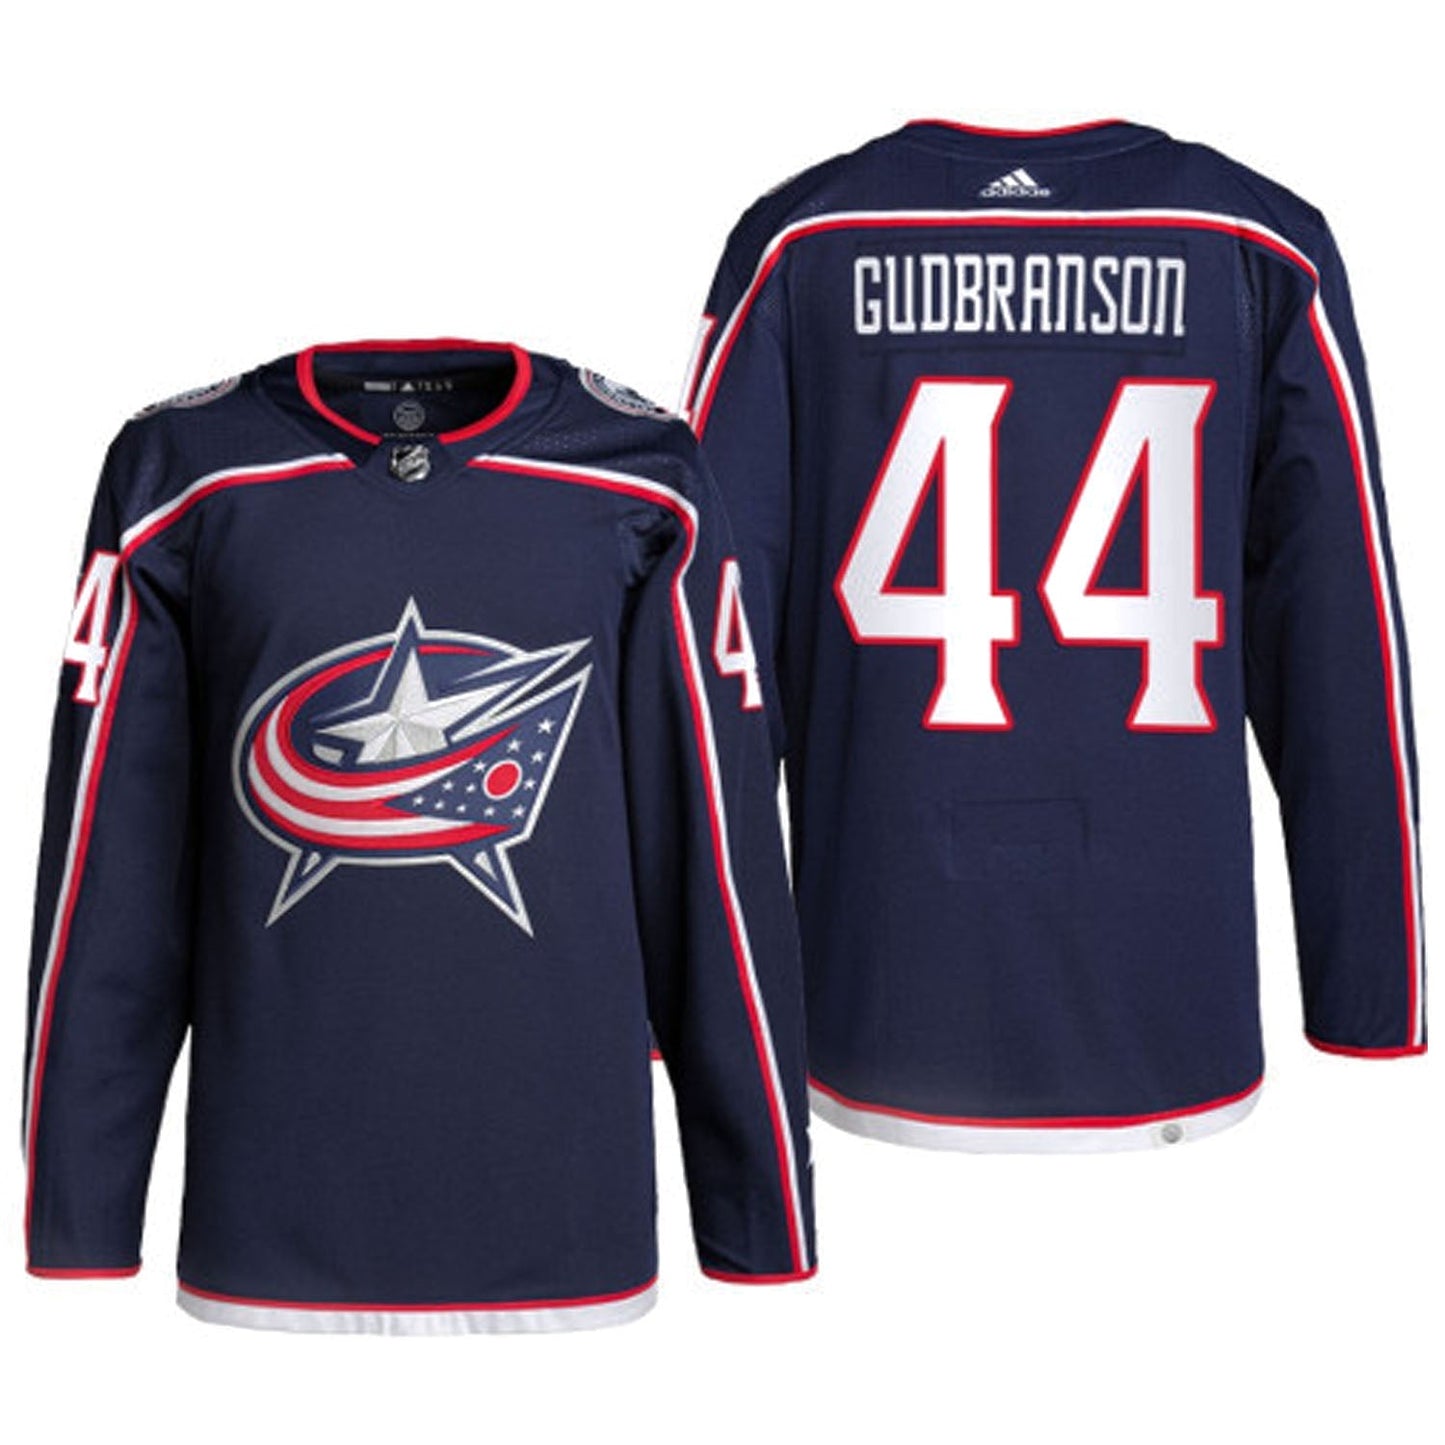 NHL Erik Gudbranson Columbus Blue Jackets 44 Jersey